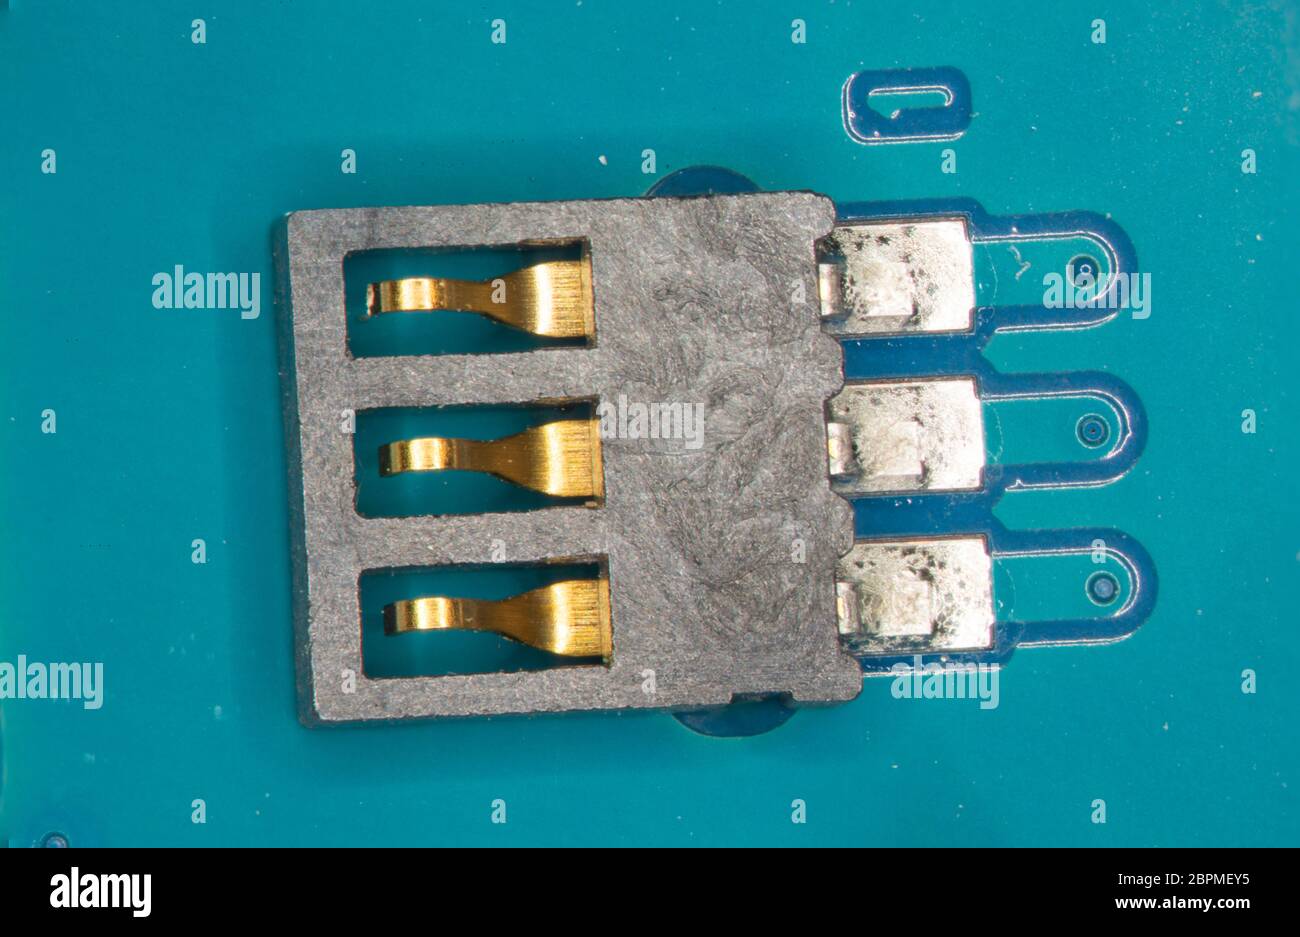 electronic circuits Stock Photo